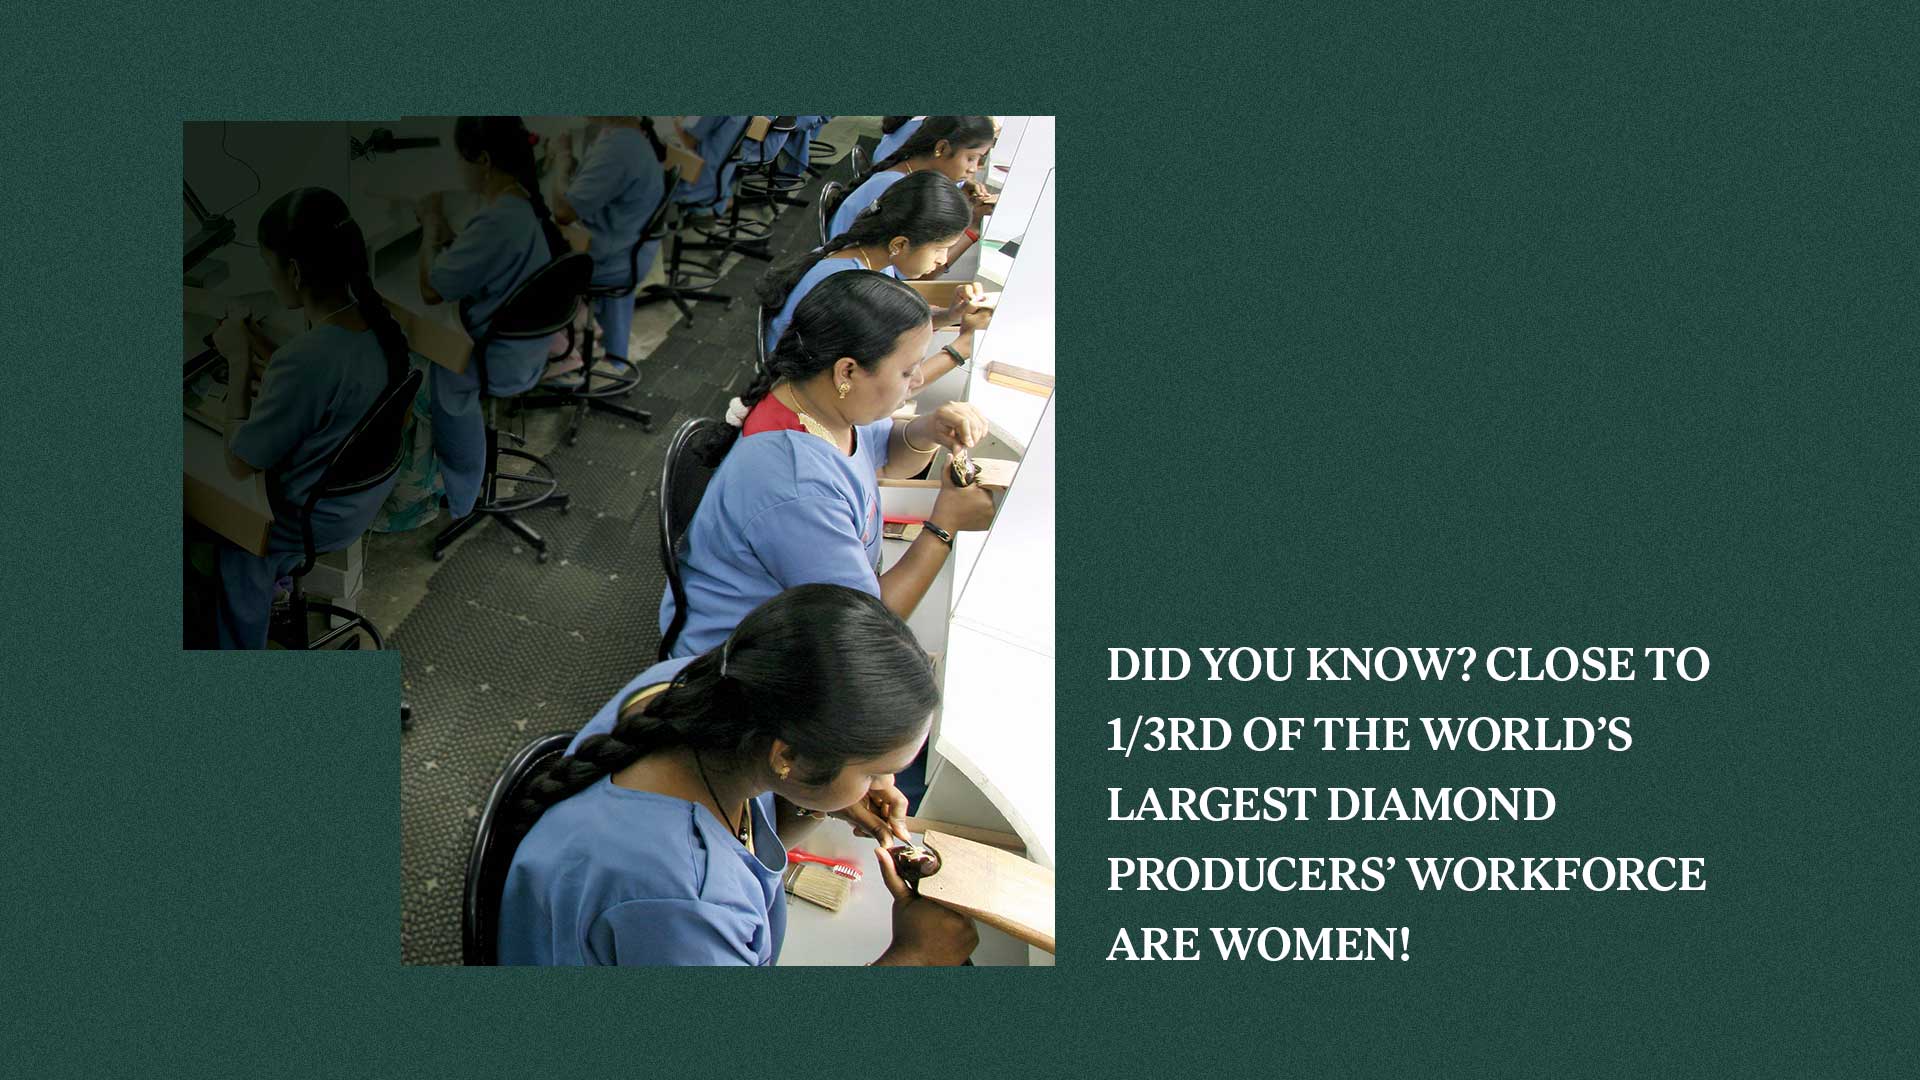 Natural diamonds helping women empowerment